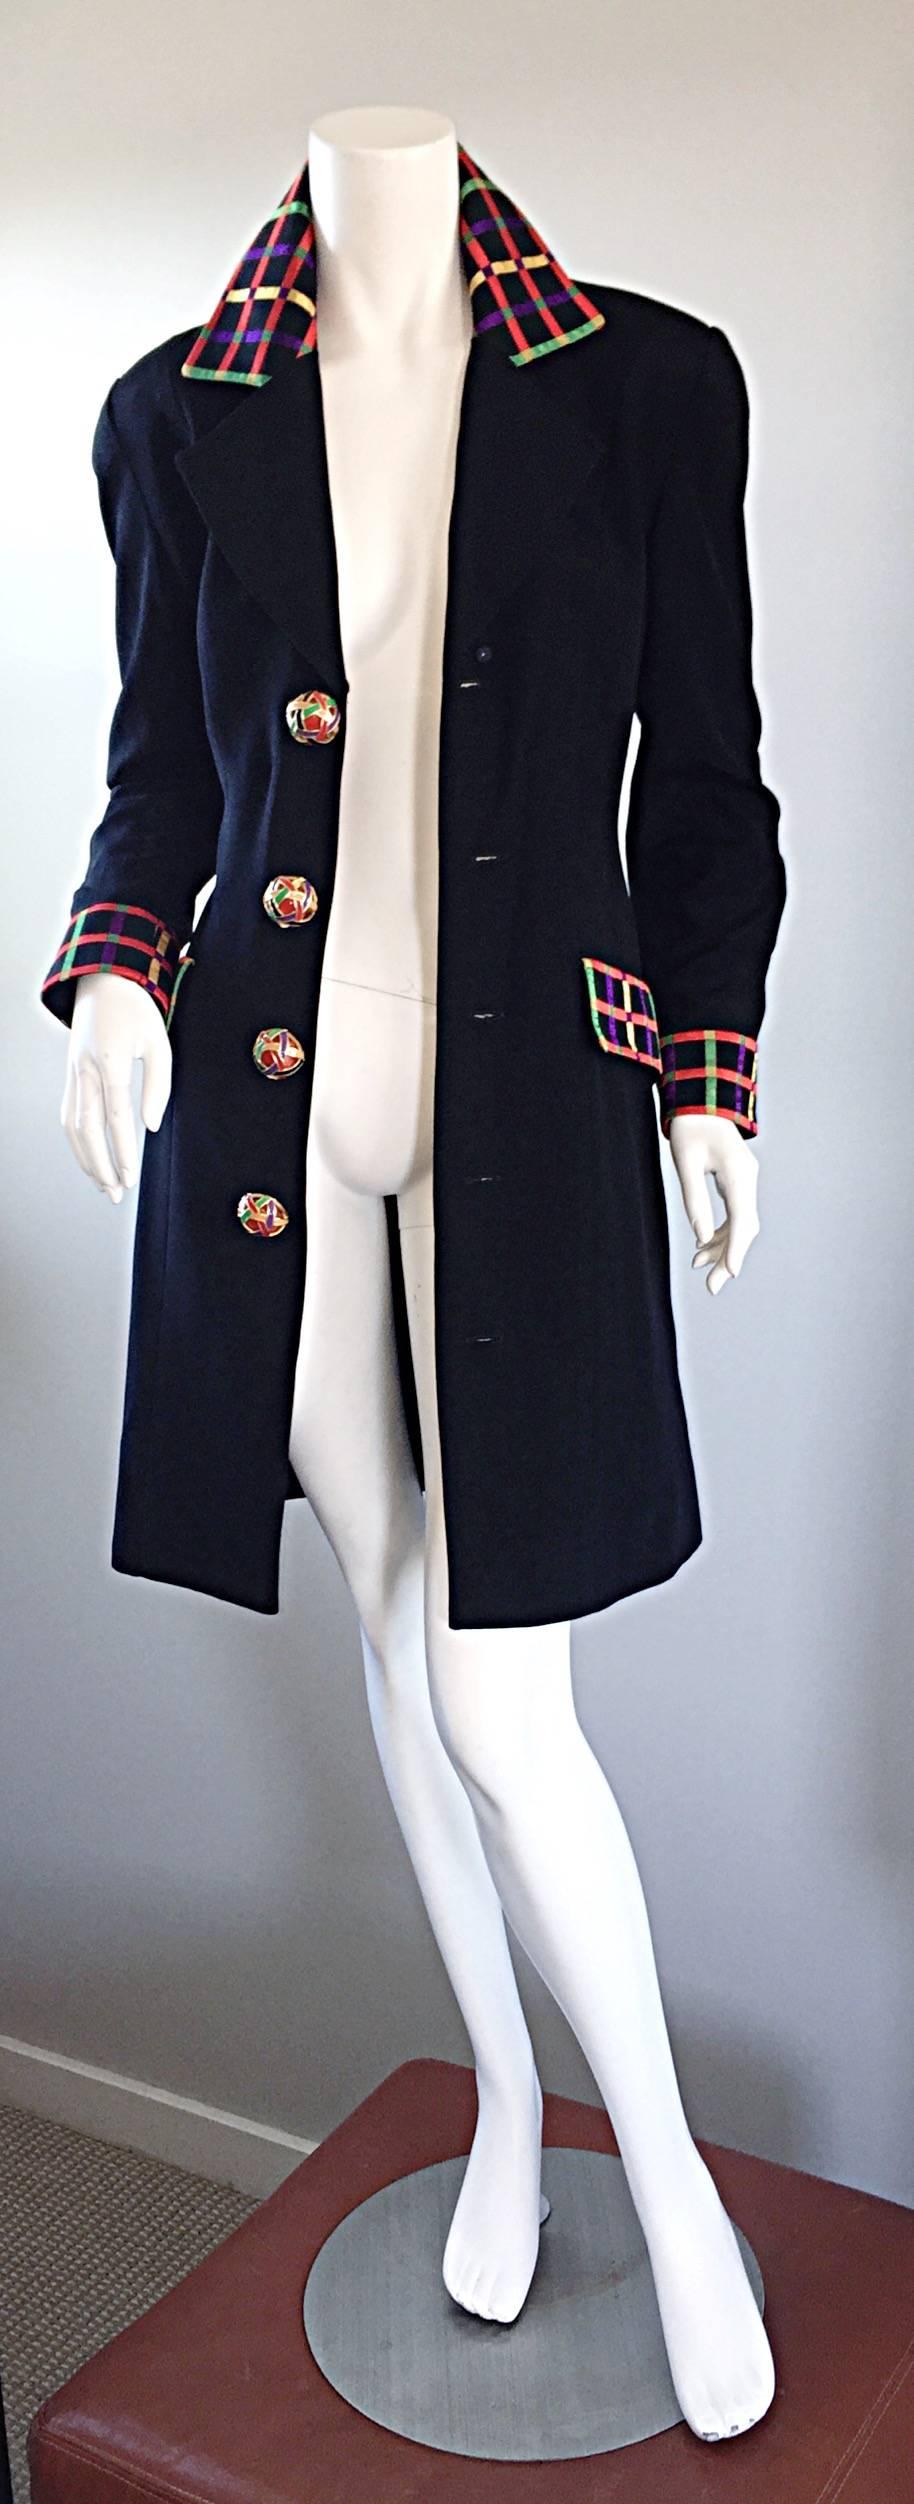 Vintage Kathryn Dianos Black Jacket Dress w/ Plaid Details + Dome Buttons 1